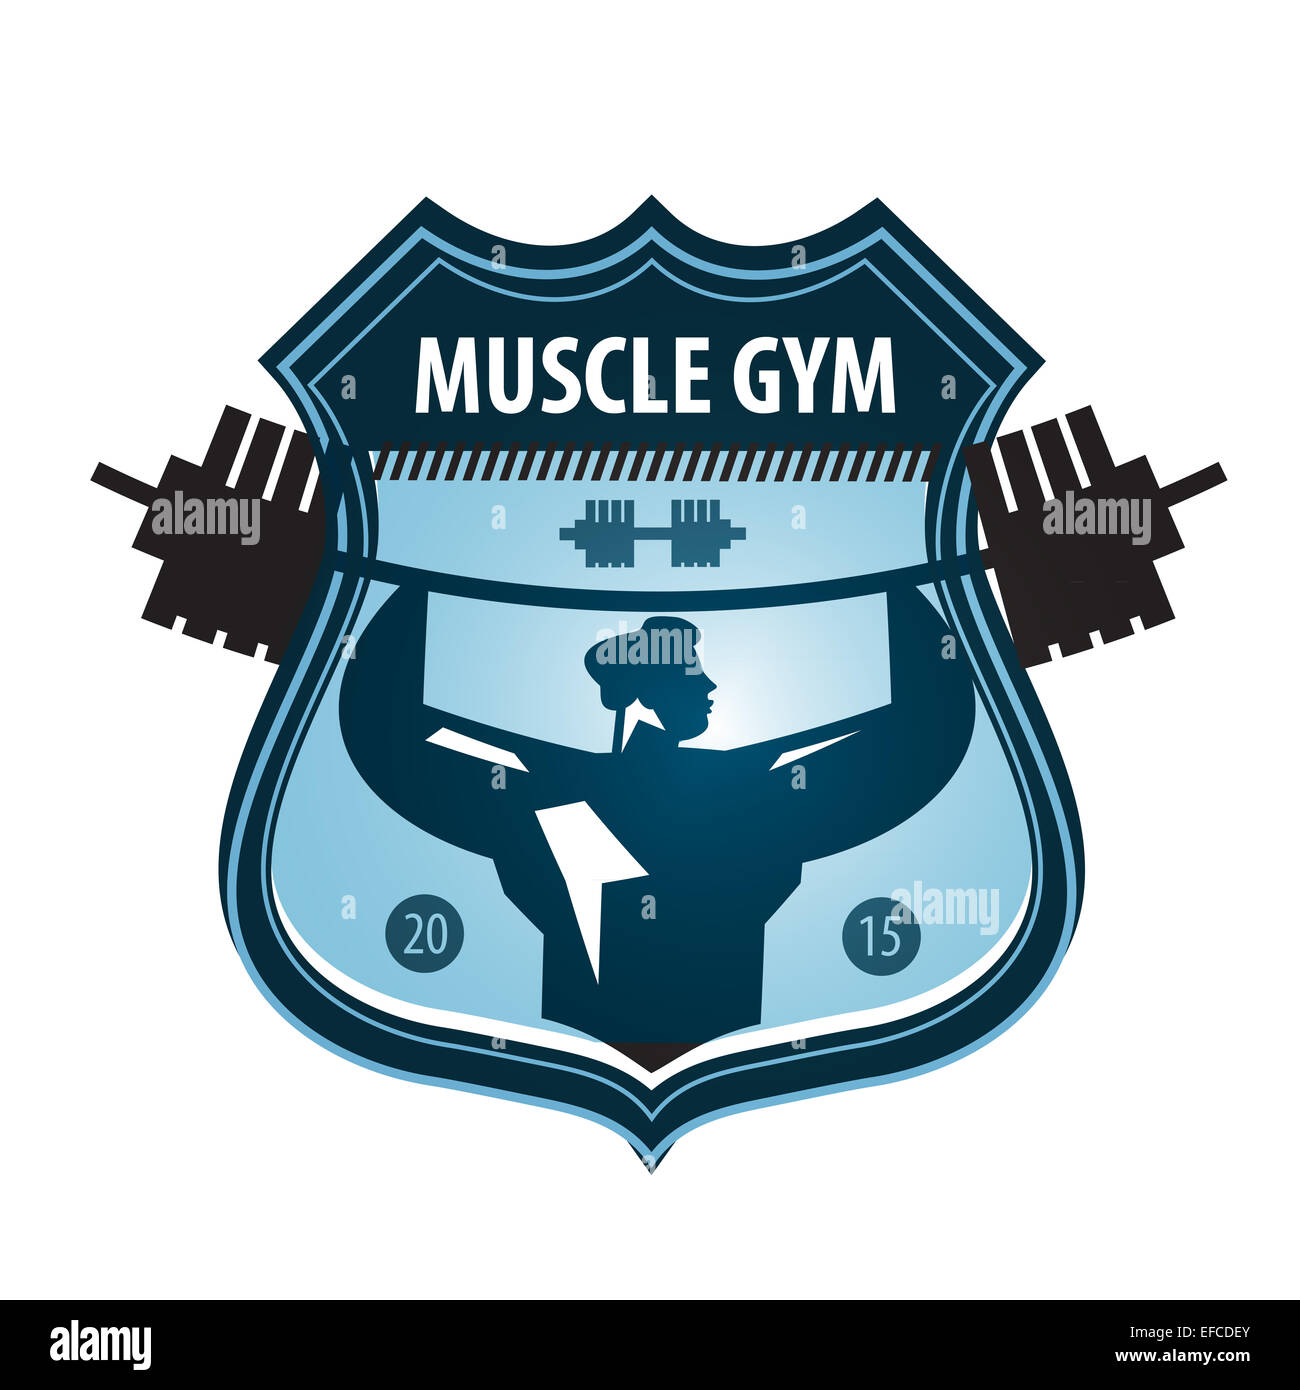 gym vector logo design template. heavy athletics or sports icon. Stock Photo